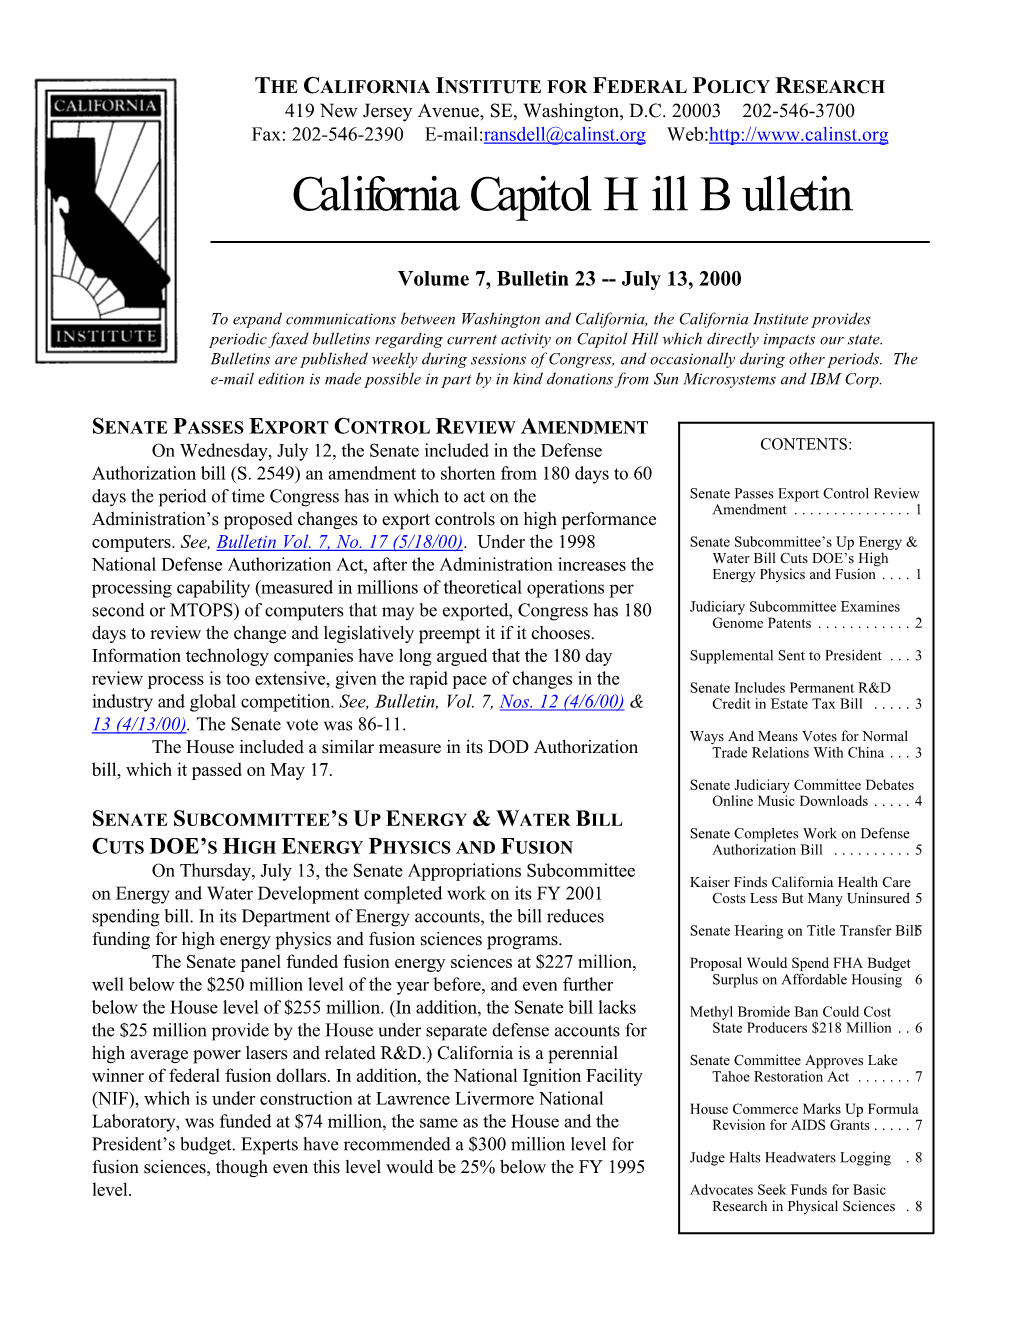 CI Capitol Hill Bulletin 7/13/00